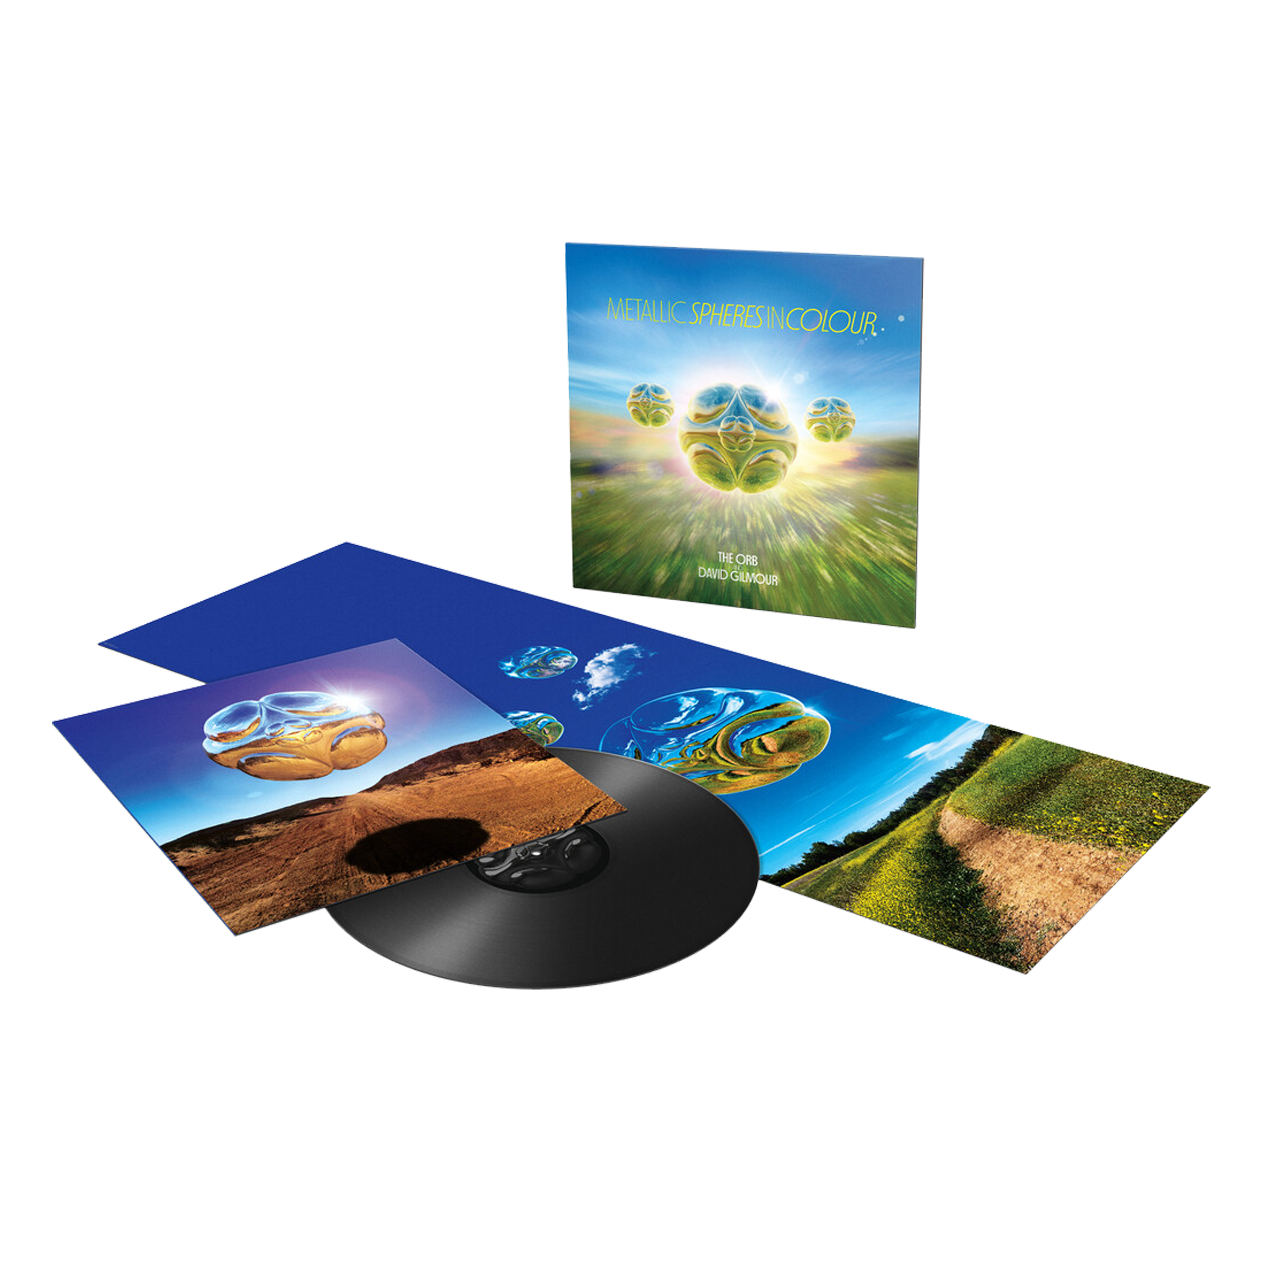 The Orb Featuring David Gilmour - Metallic Spheres In Colour: Vinyl LP